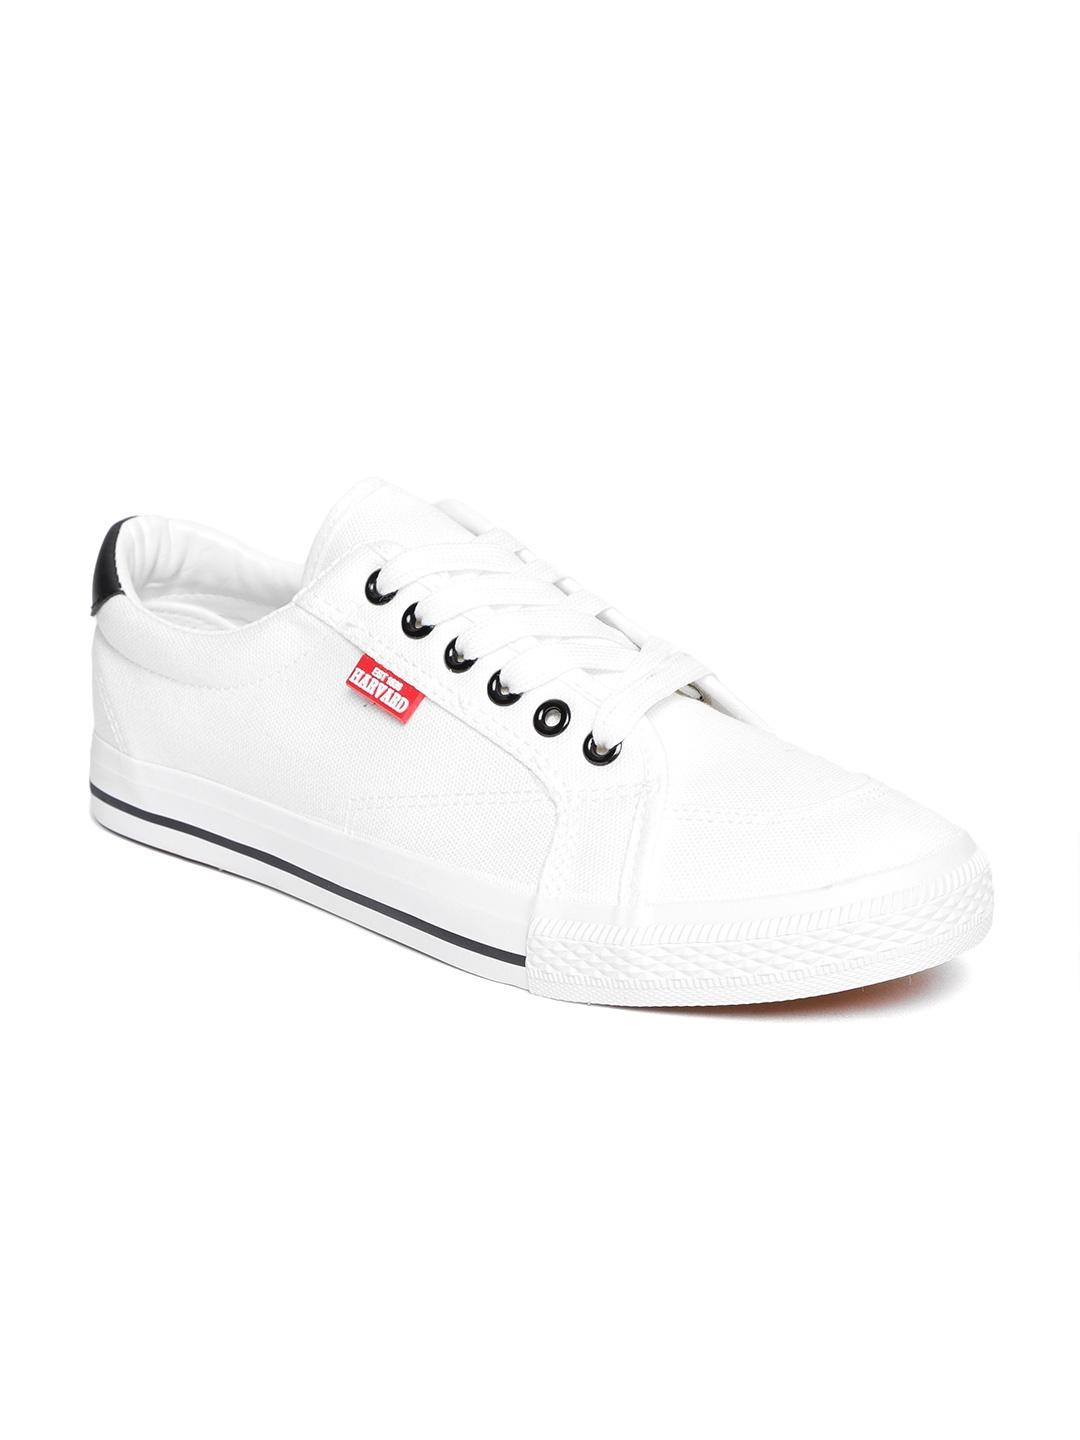 Buy Harvard Men White Sneakers - Casual Shoes for Men 8086683 | Myntra